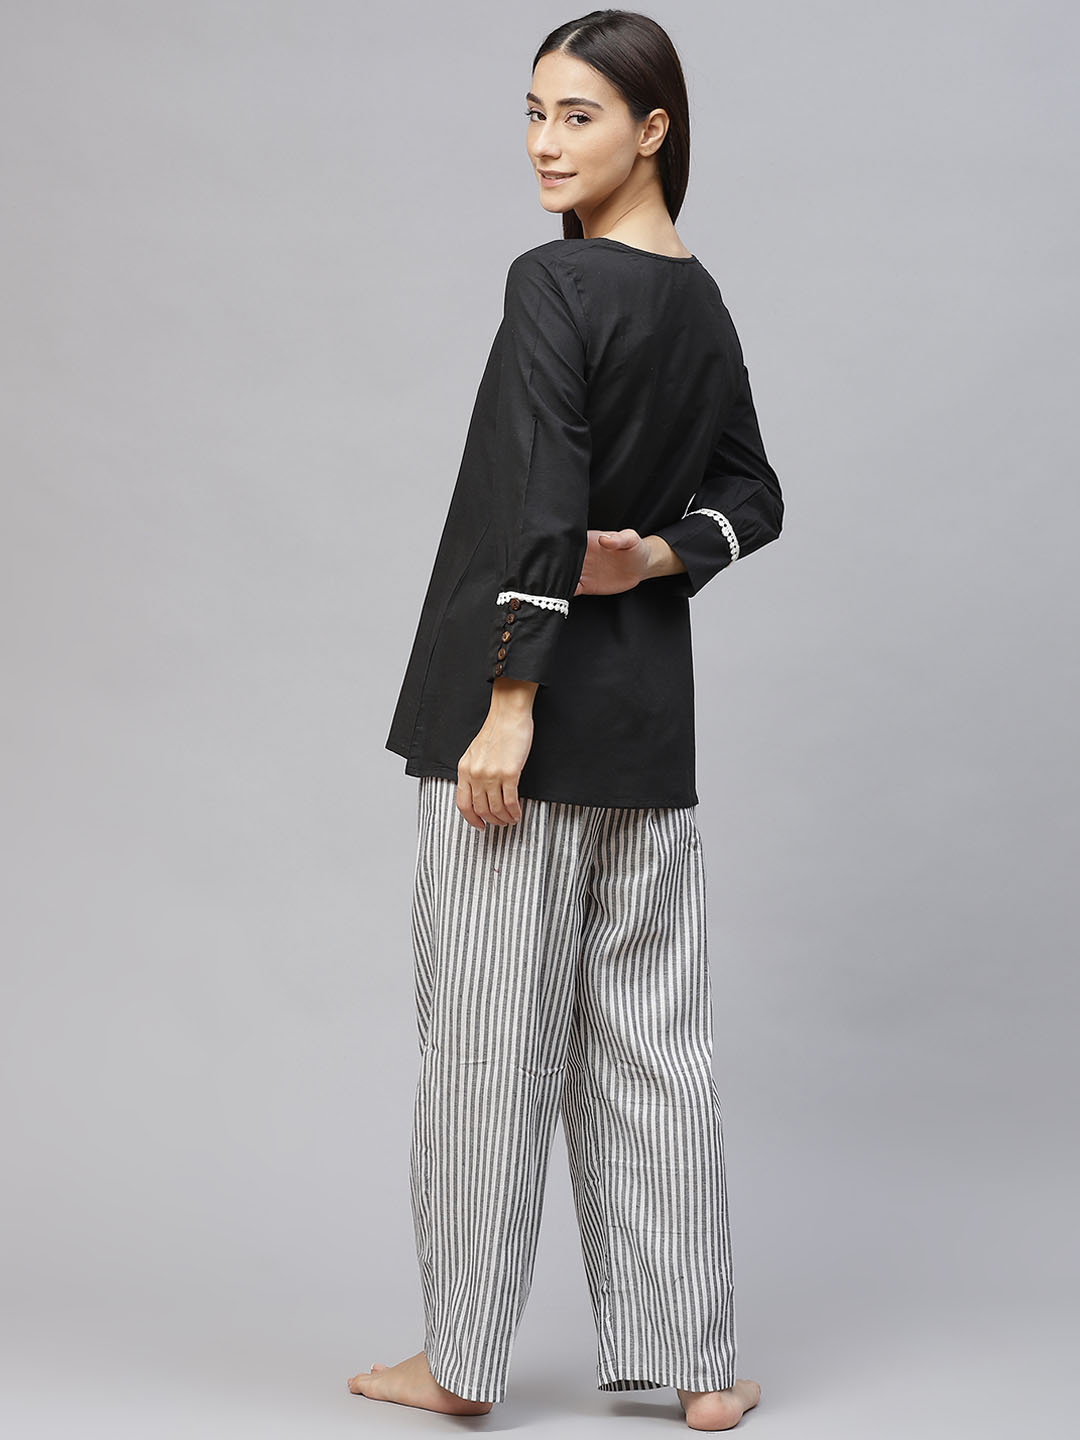 Women Black & White Solid  Cotton Lace Inserts Pyjama Set